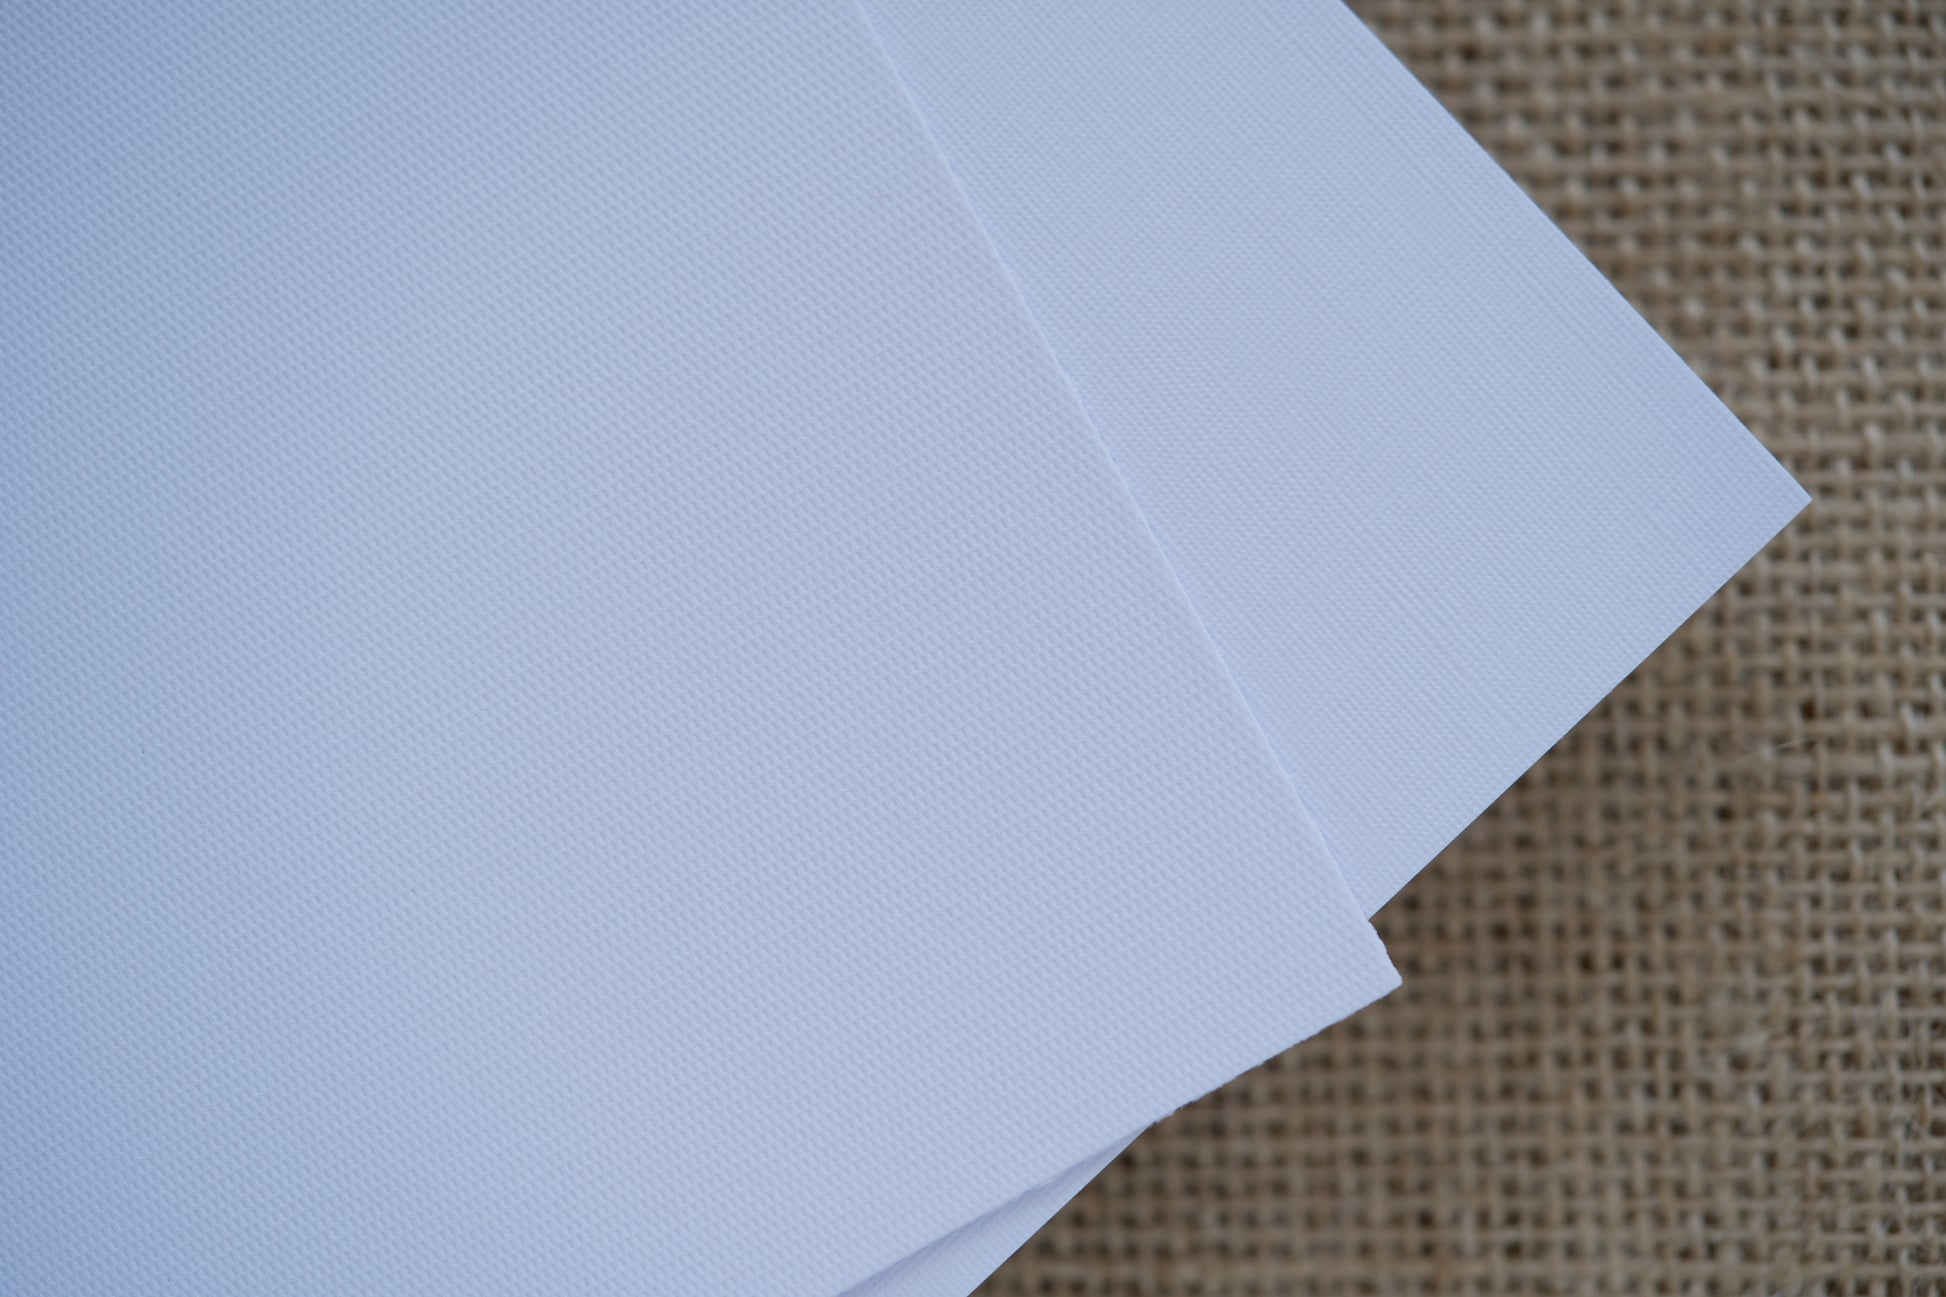 papel-texturizado-convites